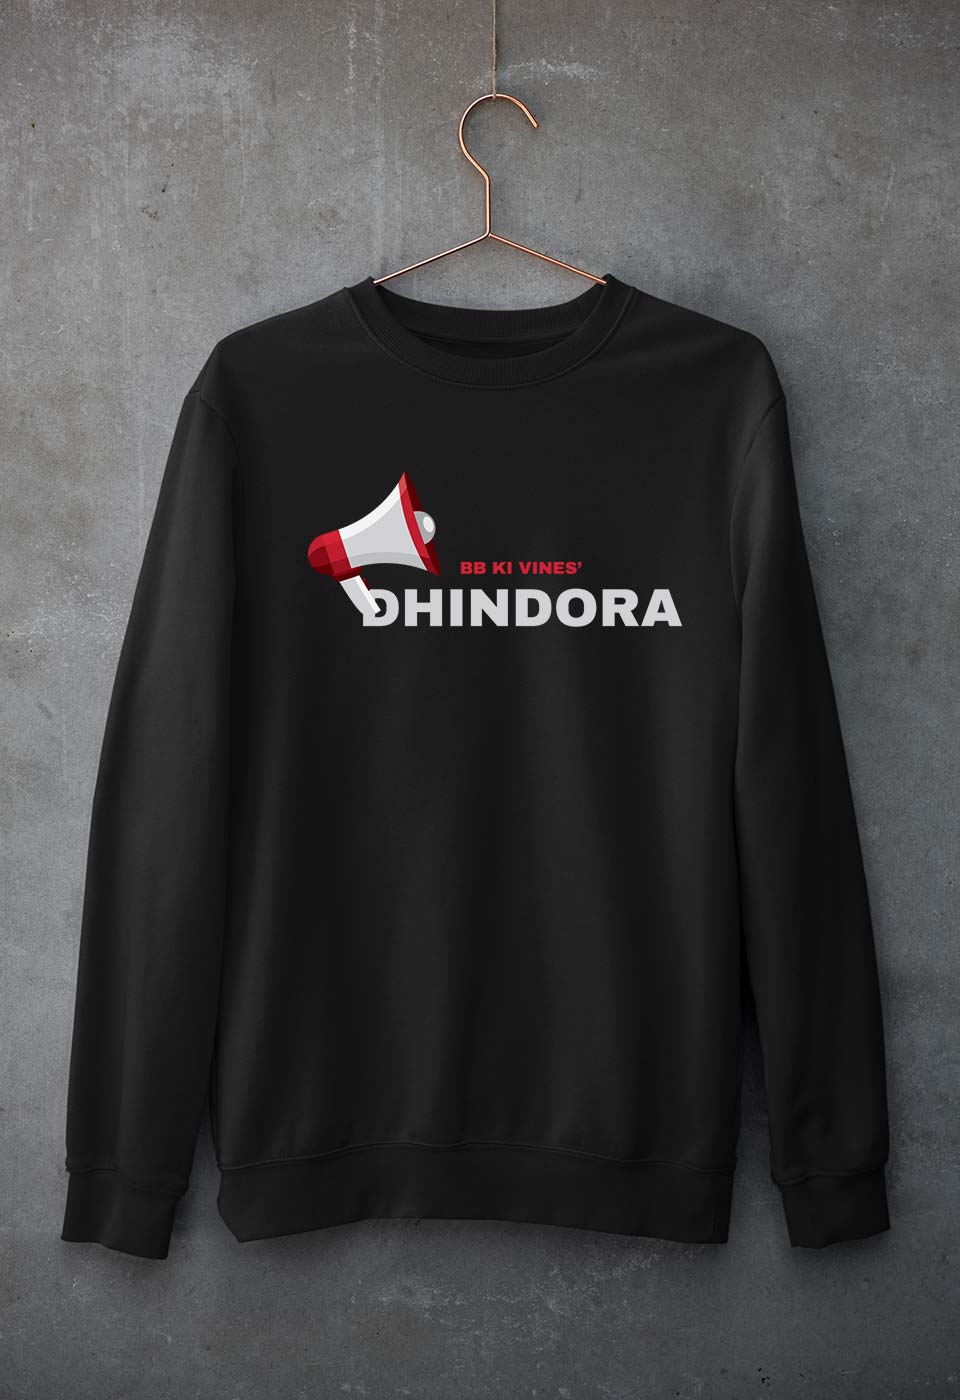 Dhindora(BB ki Vines) Unisex Sweatshirt for Men/Women-S(40 Inches)-Black-Ektarfa.online